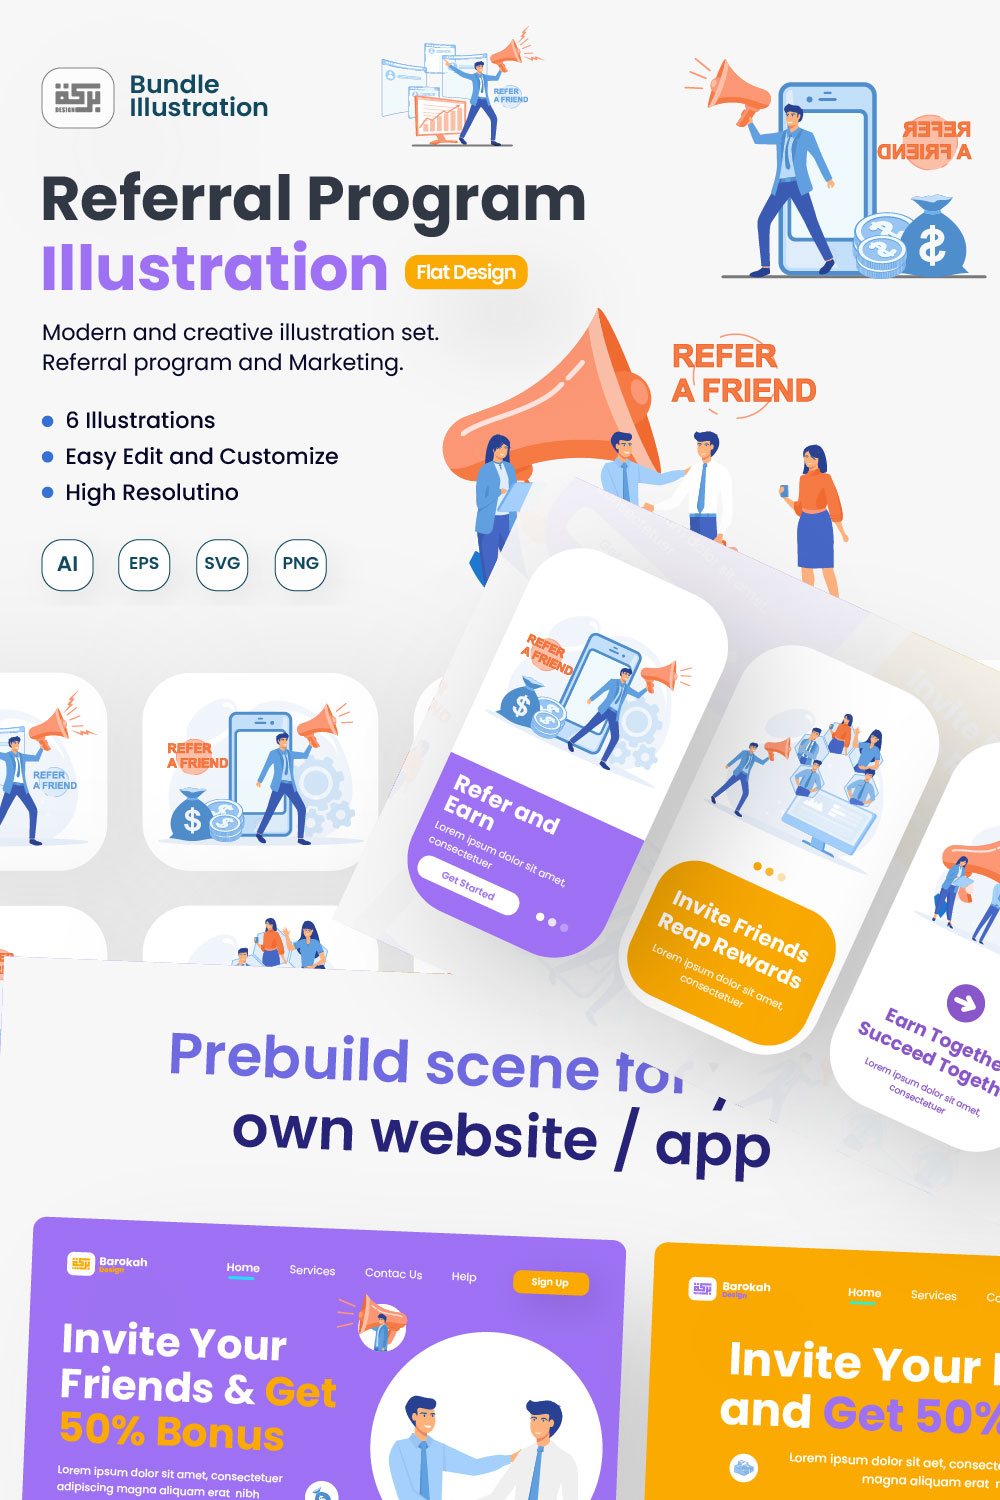 Referral Program UI Design Illustration in Marketing for App, Web, & Presentations pinterest preview image.